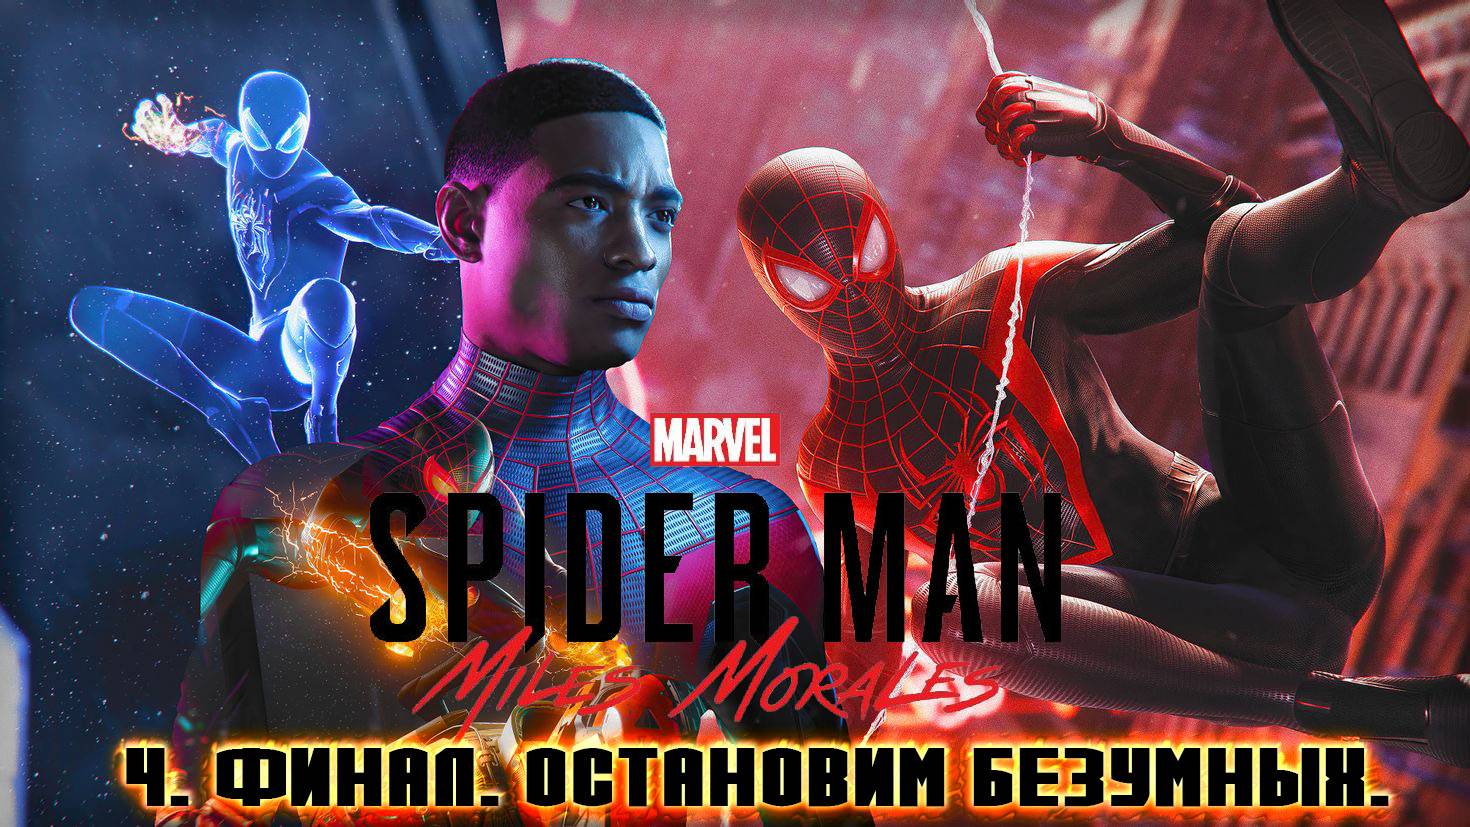 Spider - Man Miles Morales: 4. ФИНАЛ. ОСТАНОВИМ БЕЗУМНЫХ.